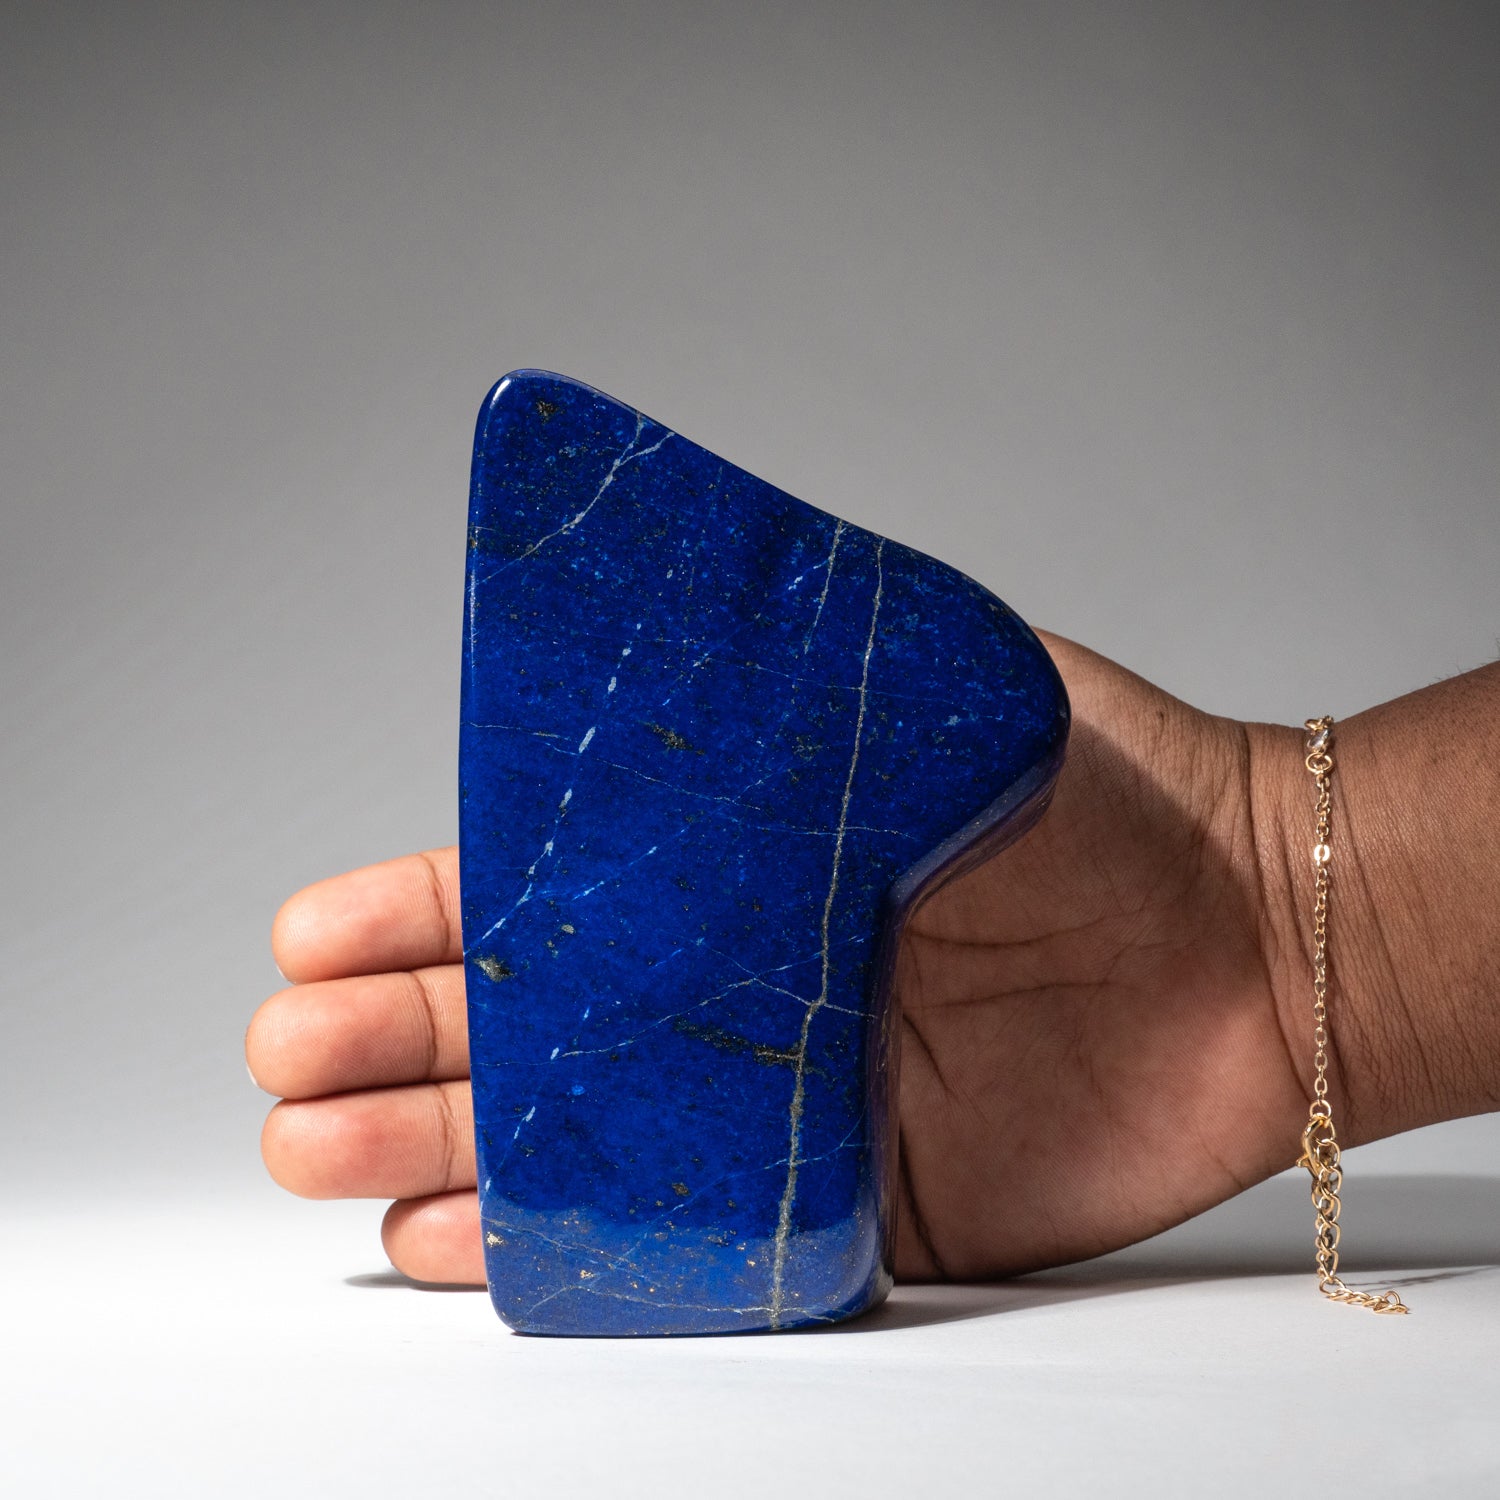 Polished Lapis Lazuli Freeform from Afghanistan (1.6 lbs)